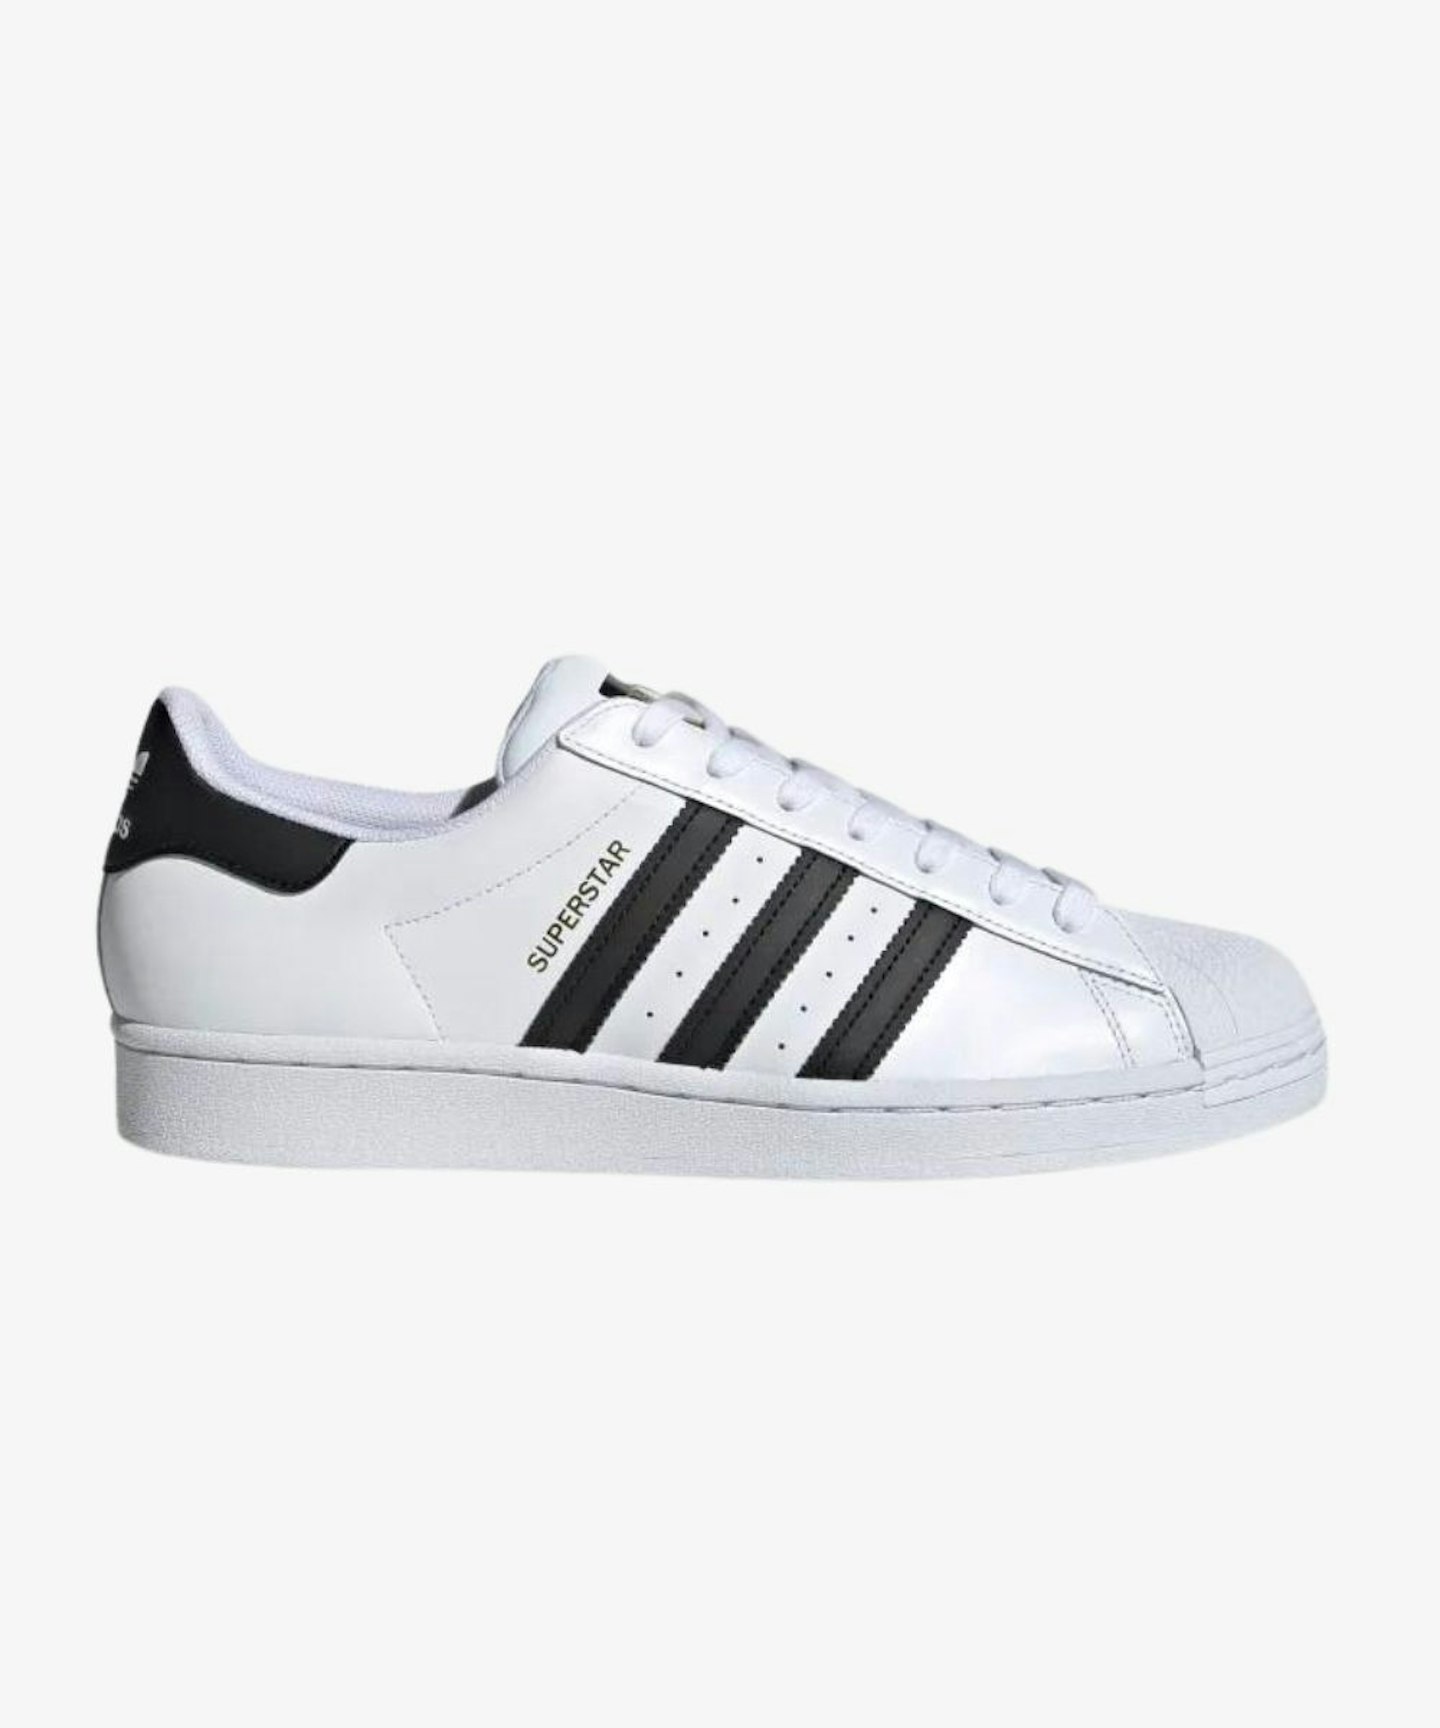 Adidas Superstar Shoes, £80